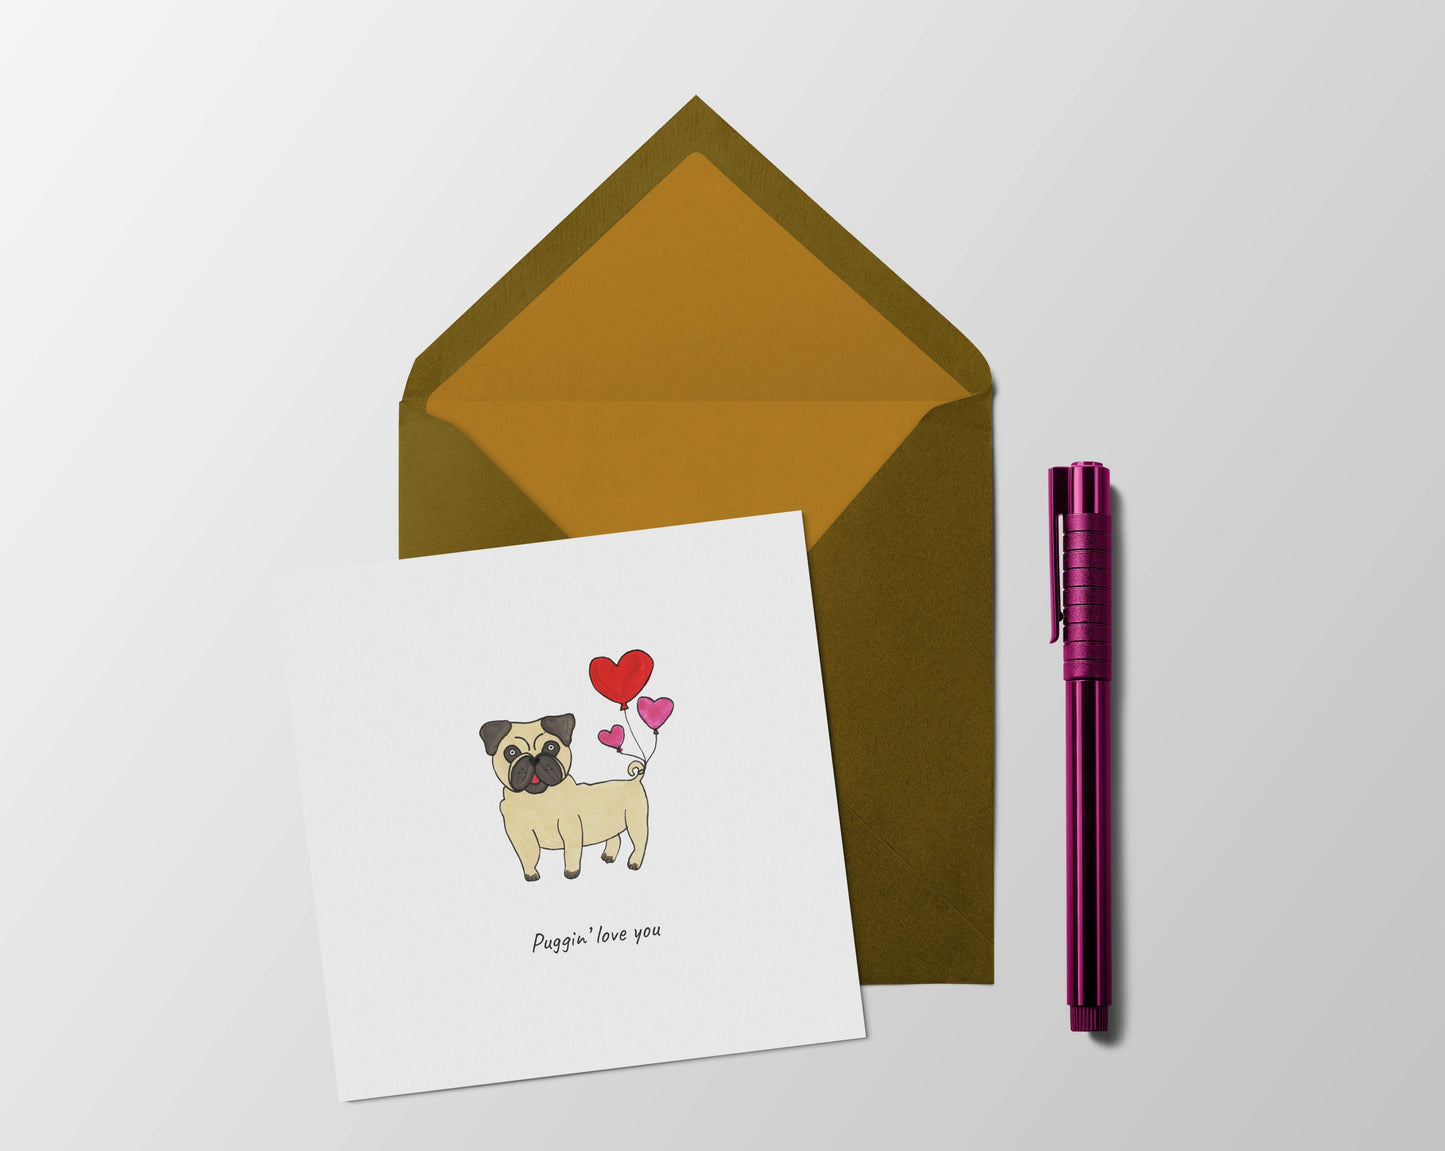 Puggin' love you anniversary / valentines card